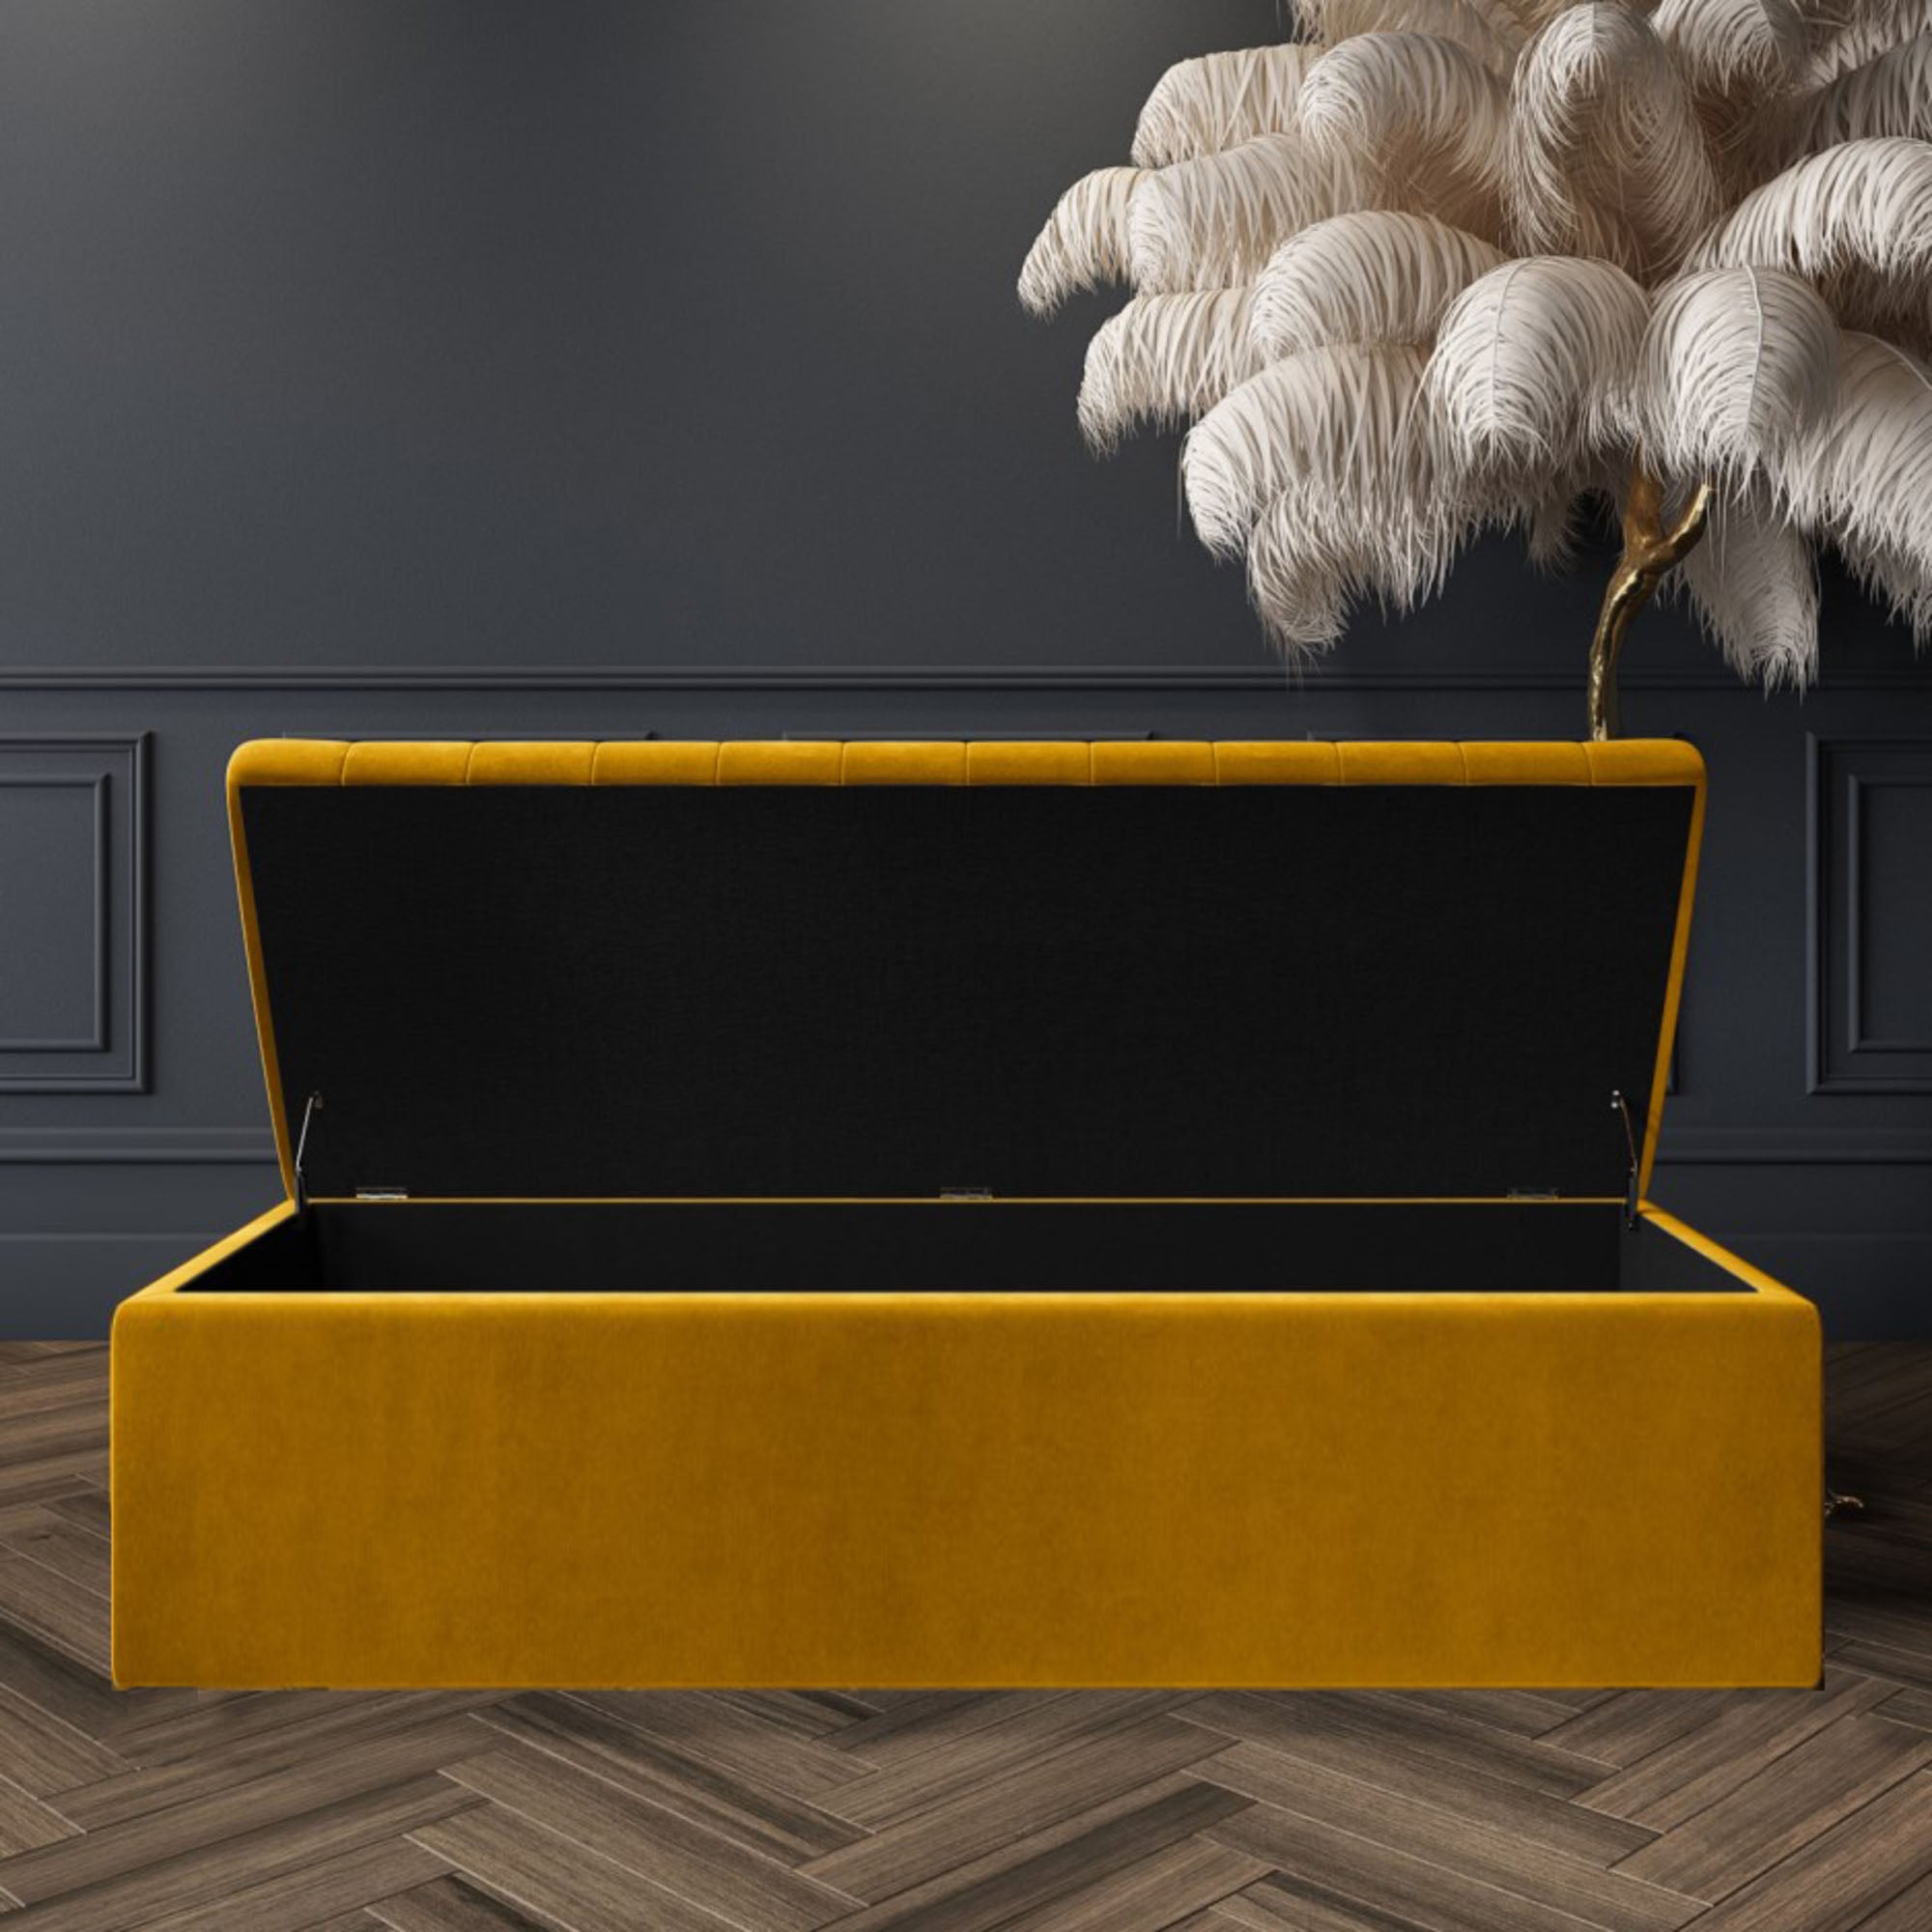 Large blanket box, velvet upholstered ottoman bench with storage, end of bed bench, blanket storage box